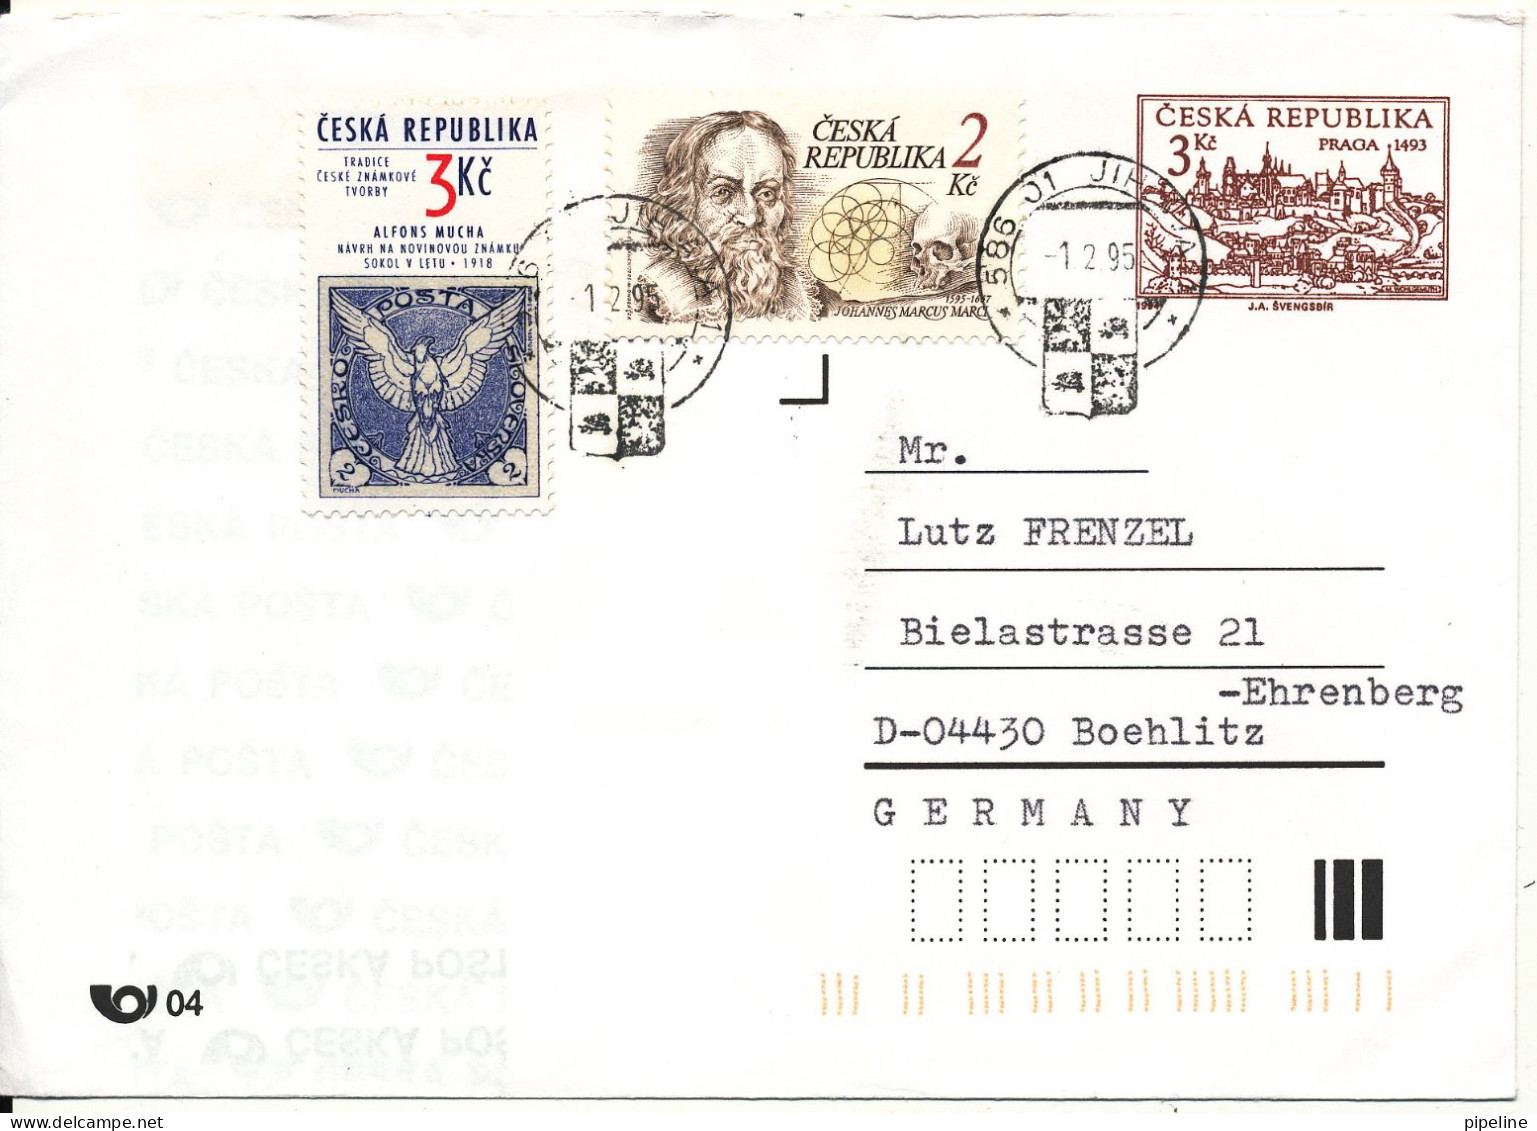 Czech Republic Uprated Postal Stationery Cover Sent To Germany 1-2-1995 - Omslagen